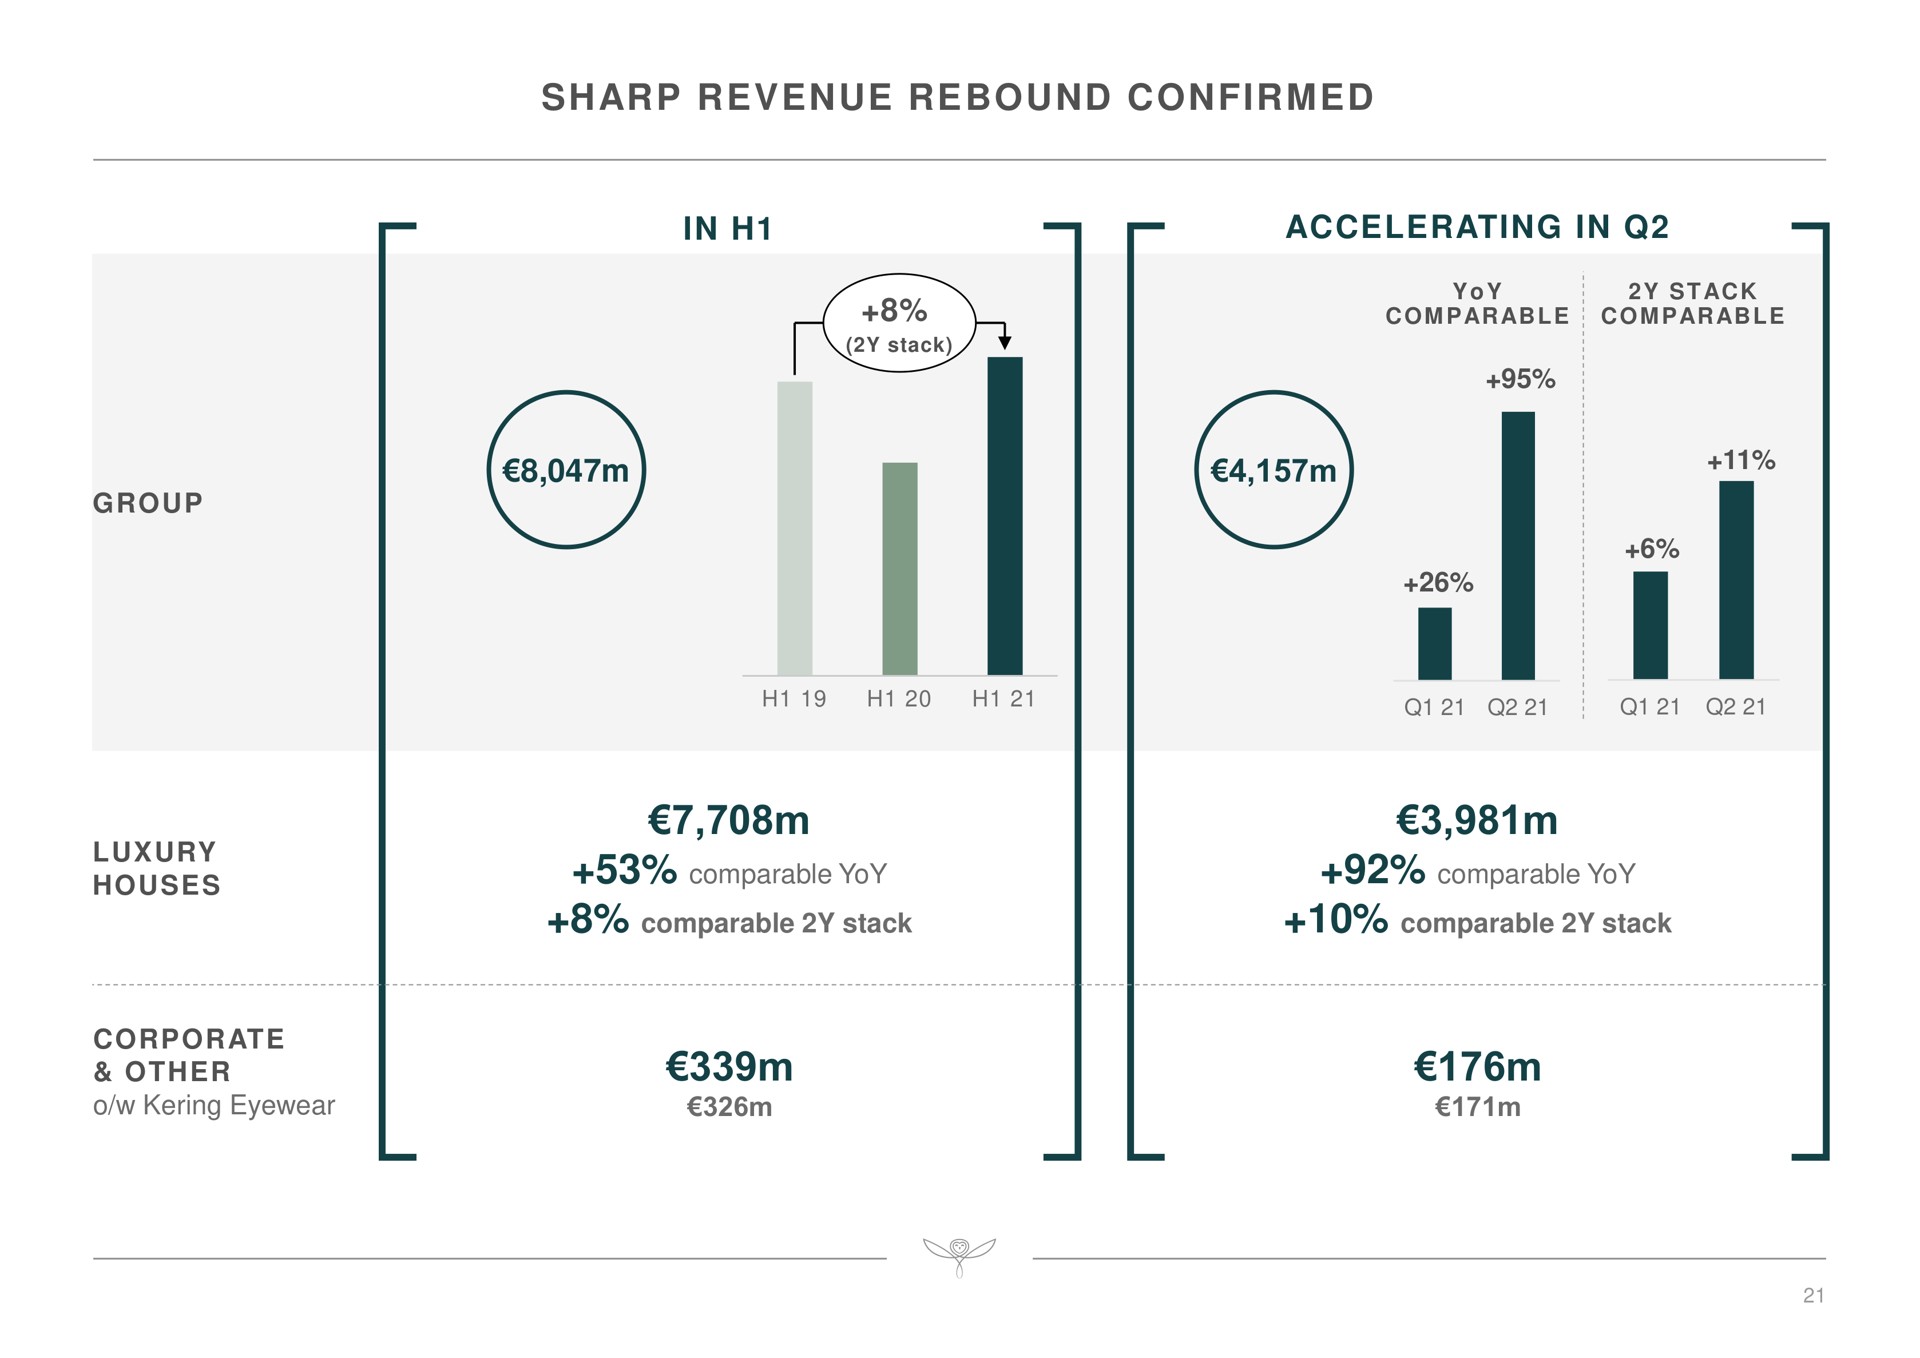 sharp revenue rebound confirmed in accelerating in i | Kering